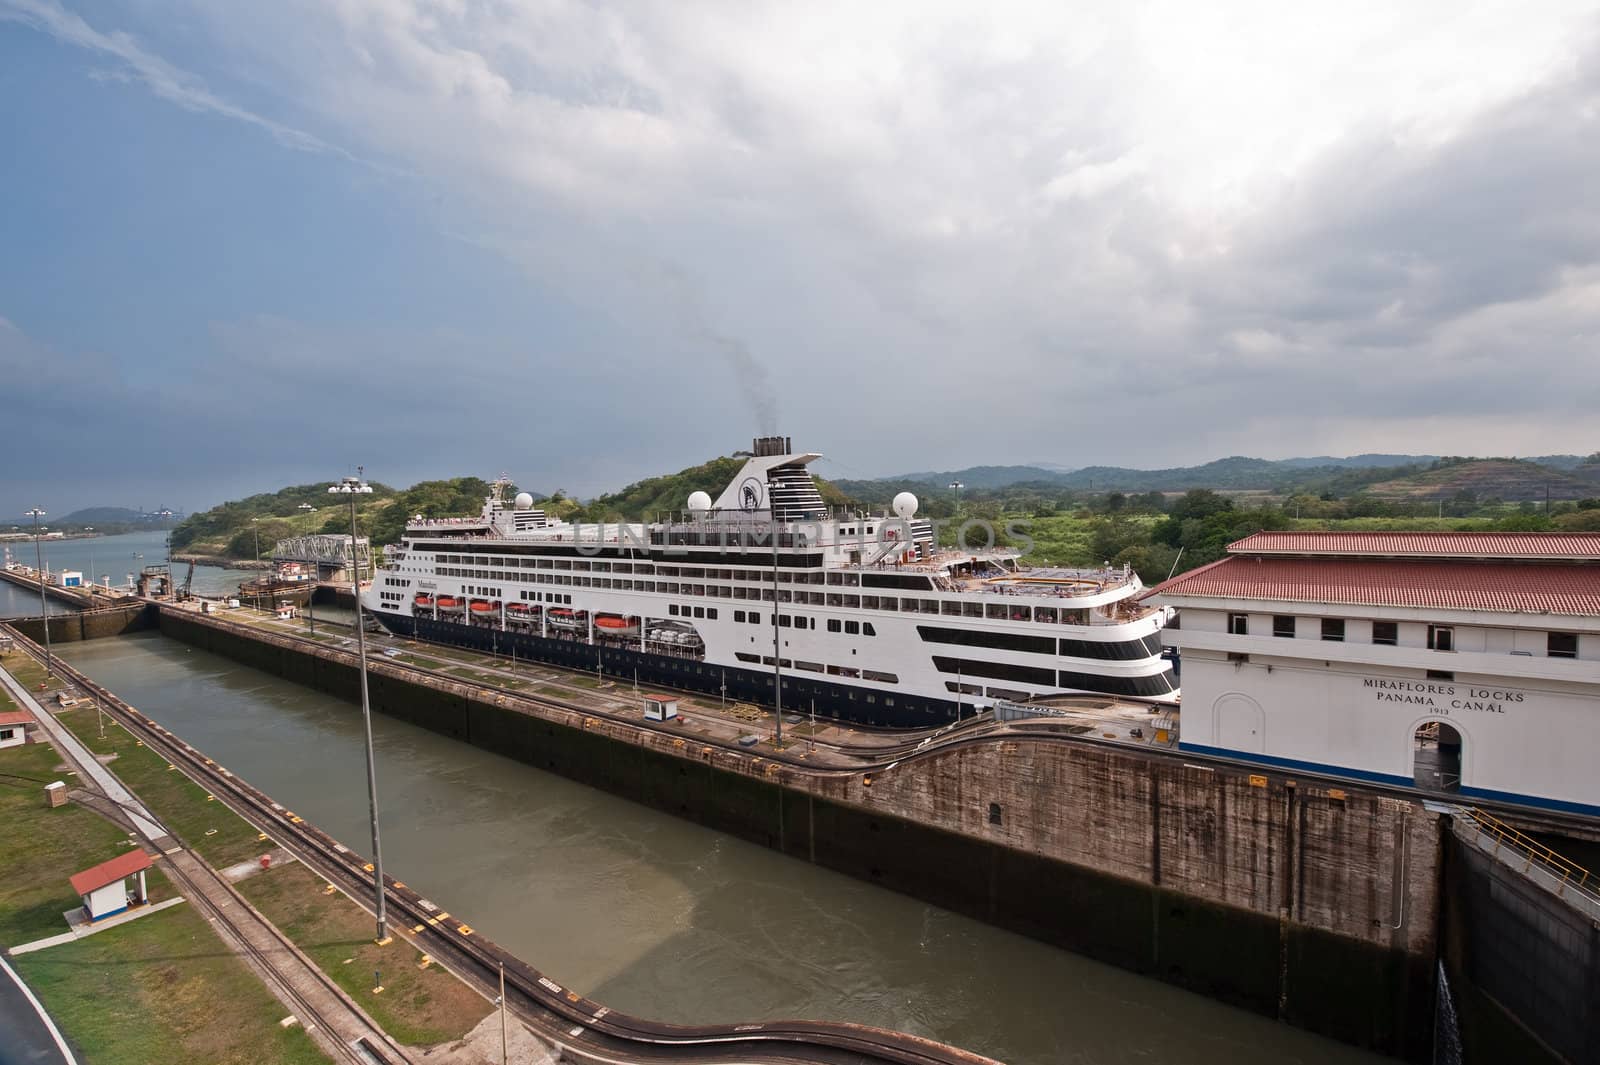 Ship is entering Miraflores locks in Panama Canal